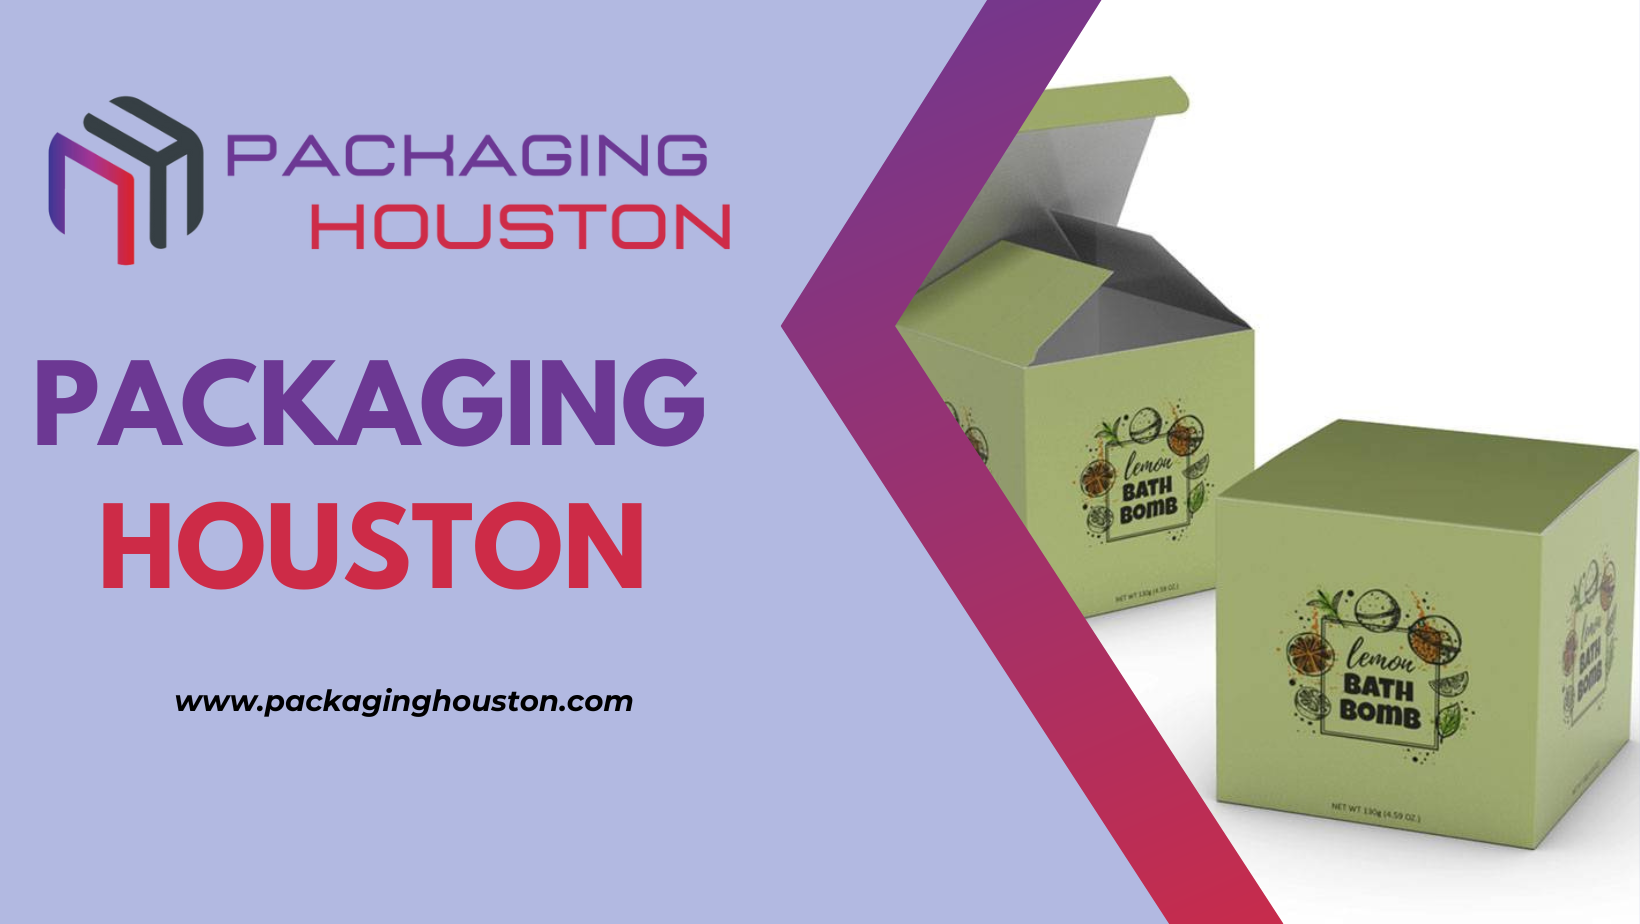 Packaging Houston cover